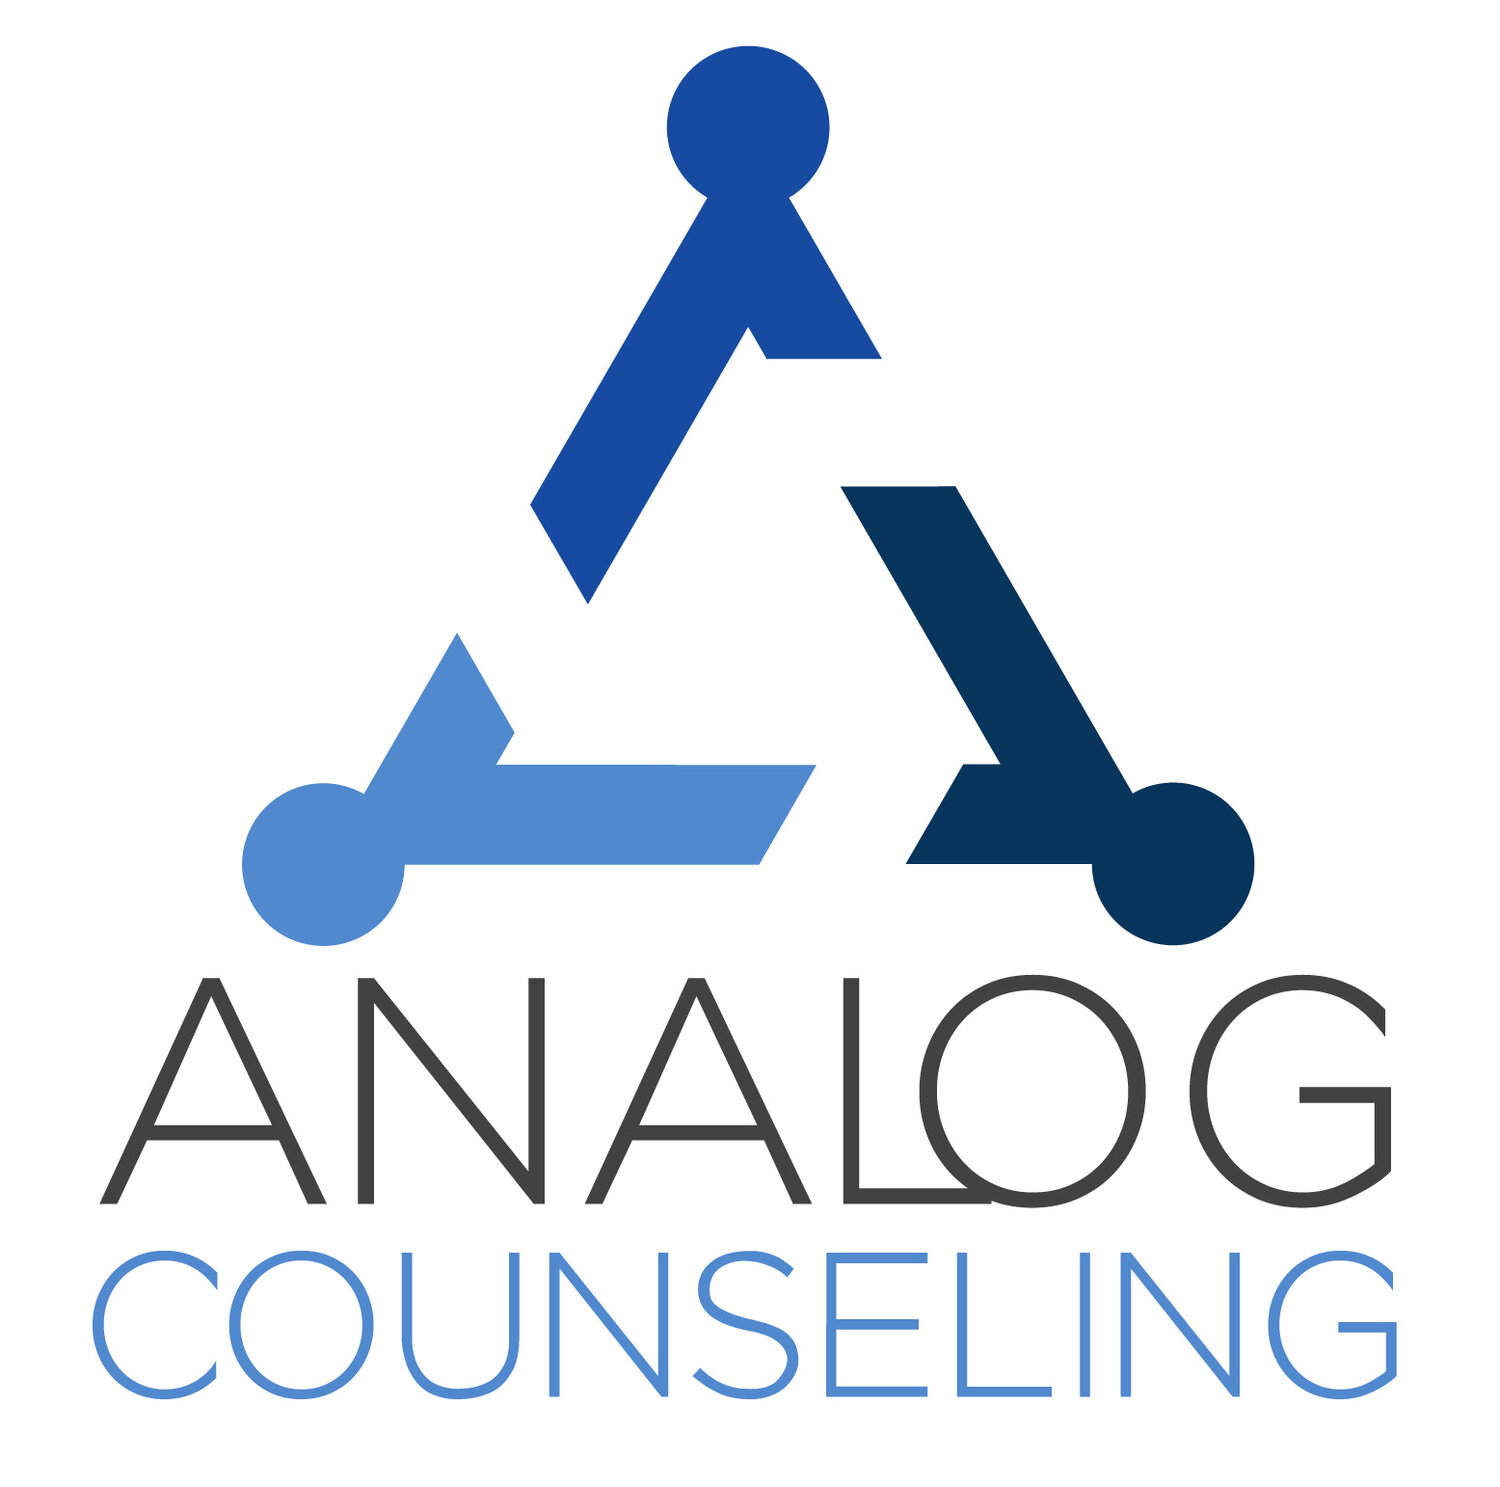 Analog Counseling 